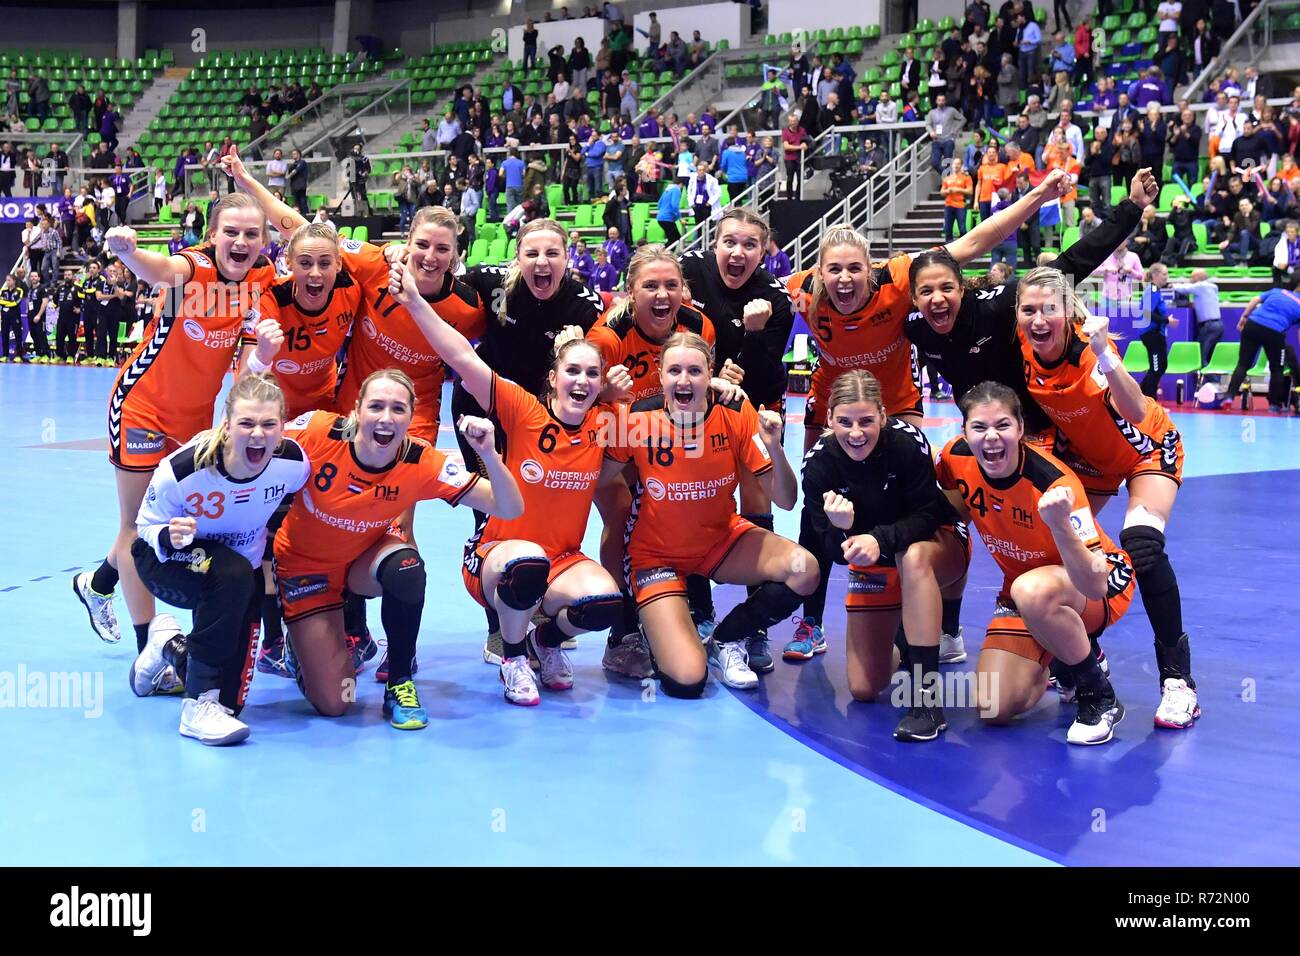 Montbeliard, Frankreich 1. dezember 2018 Europameisterschaften Handball: Niederlande gegen Spanien EK Handbal in Frankrijk, voorronde groep C Nederland - Spanien De overwinning is binnen Stockfoto